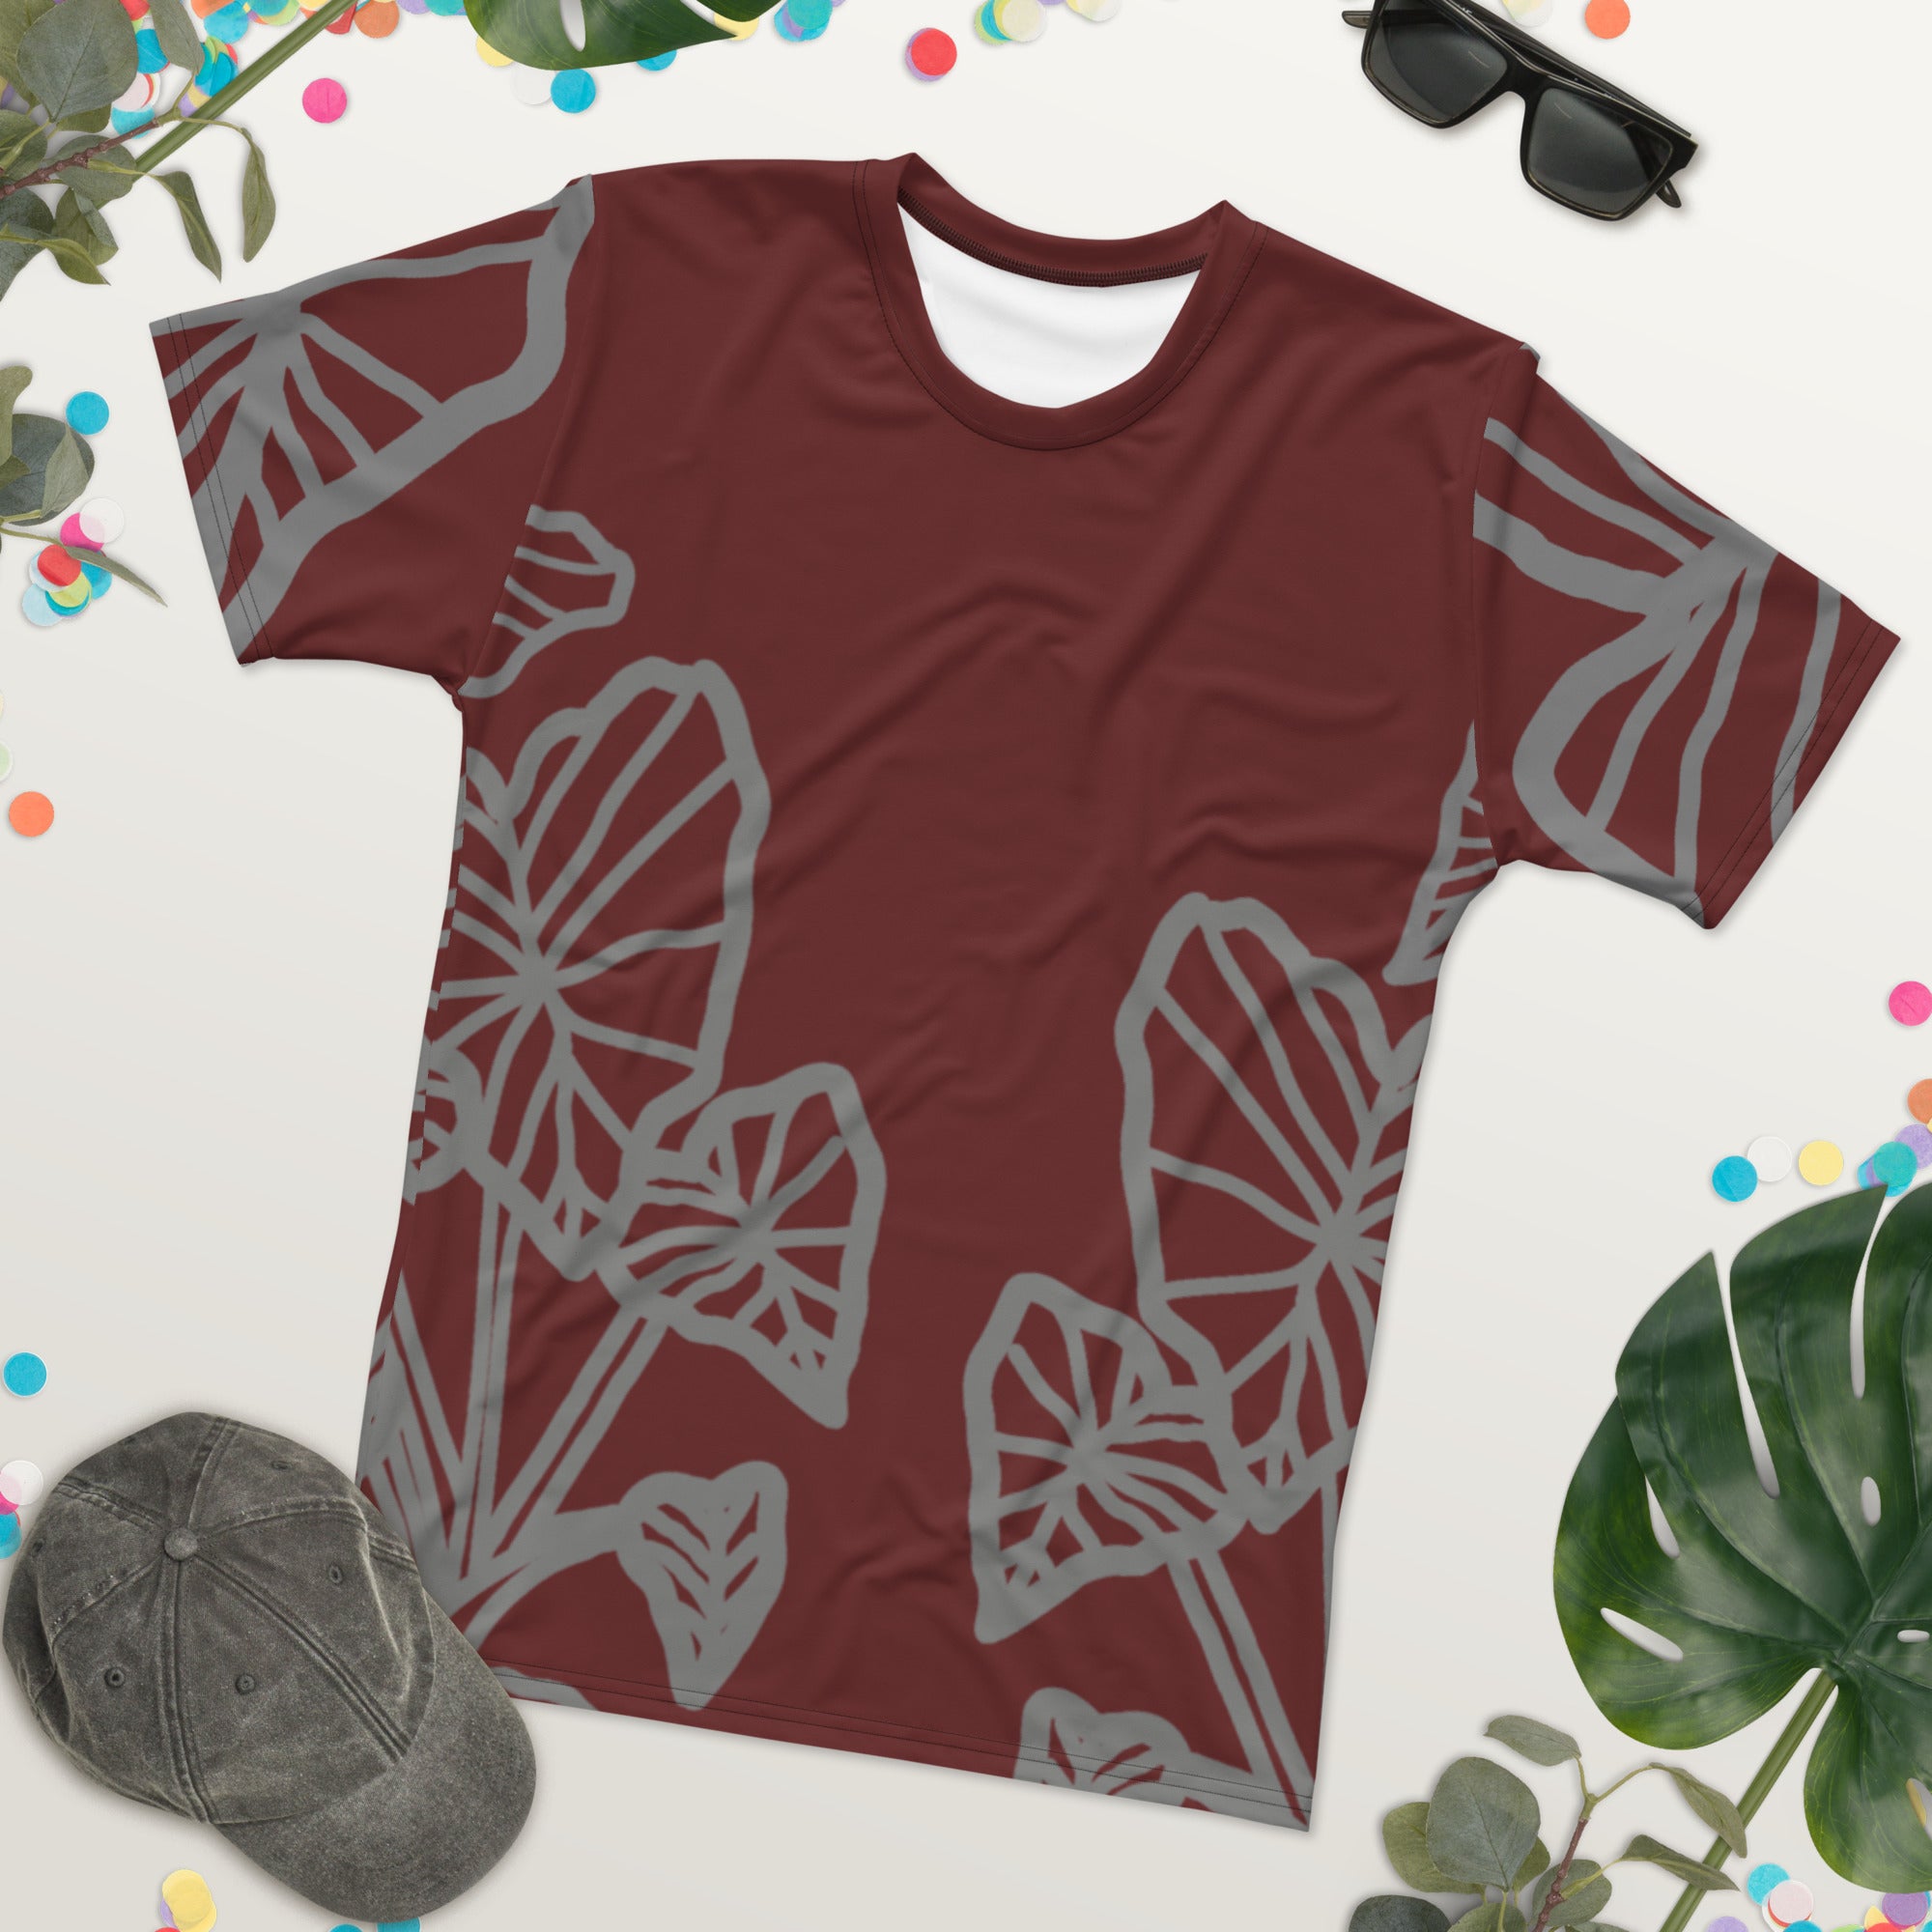 Kalo Taro Hawaiian Print T-Shirt (soft red and gray)